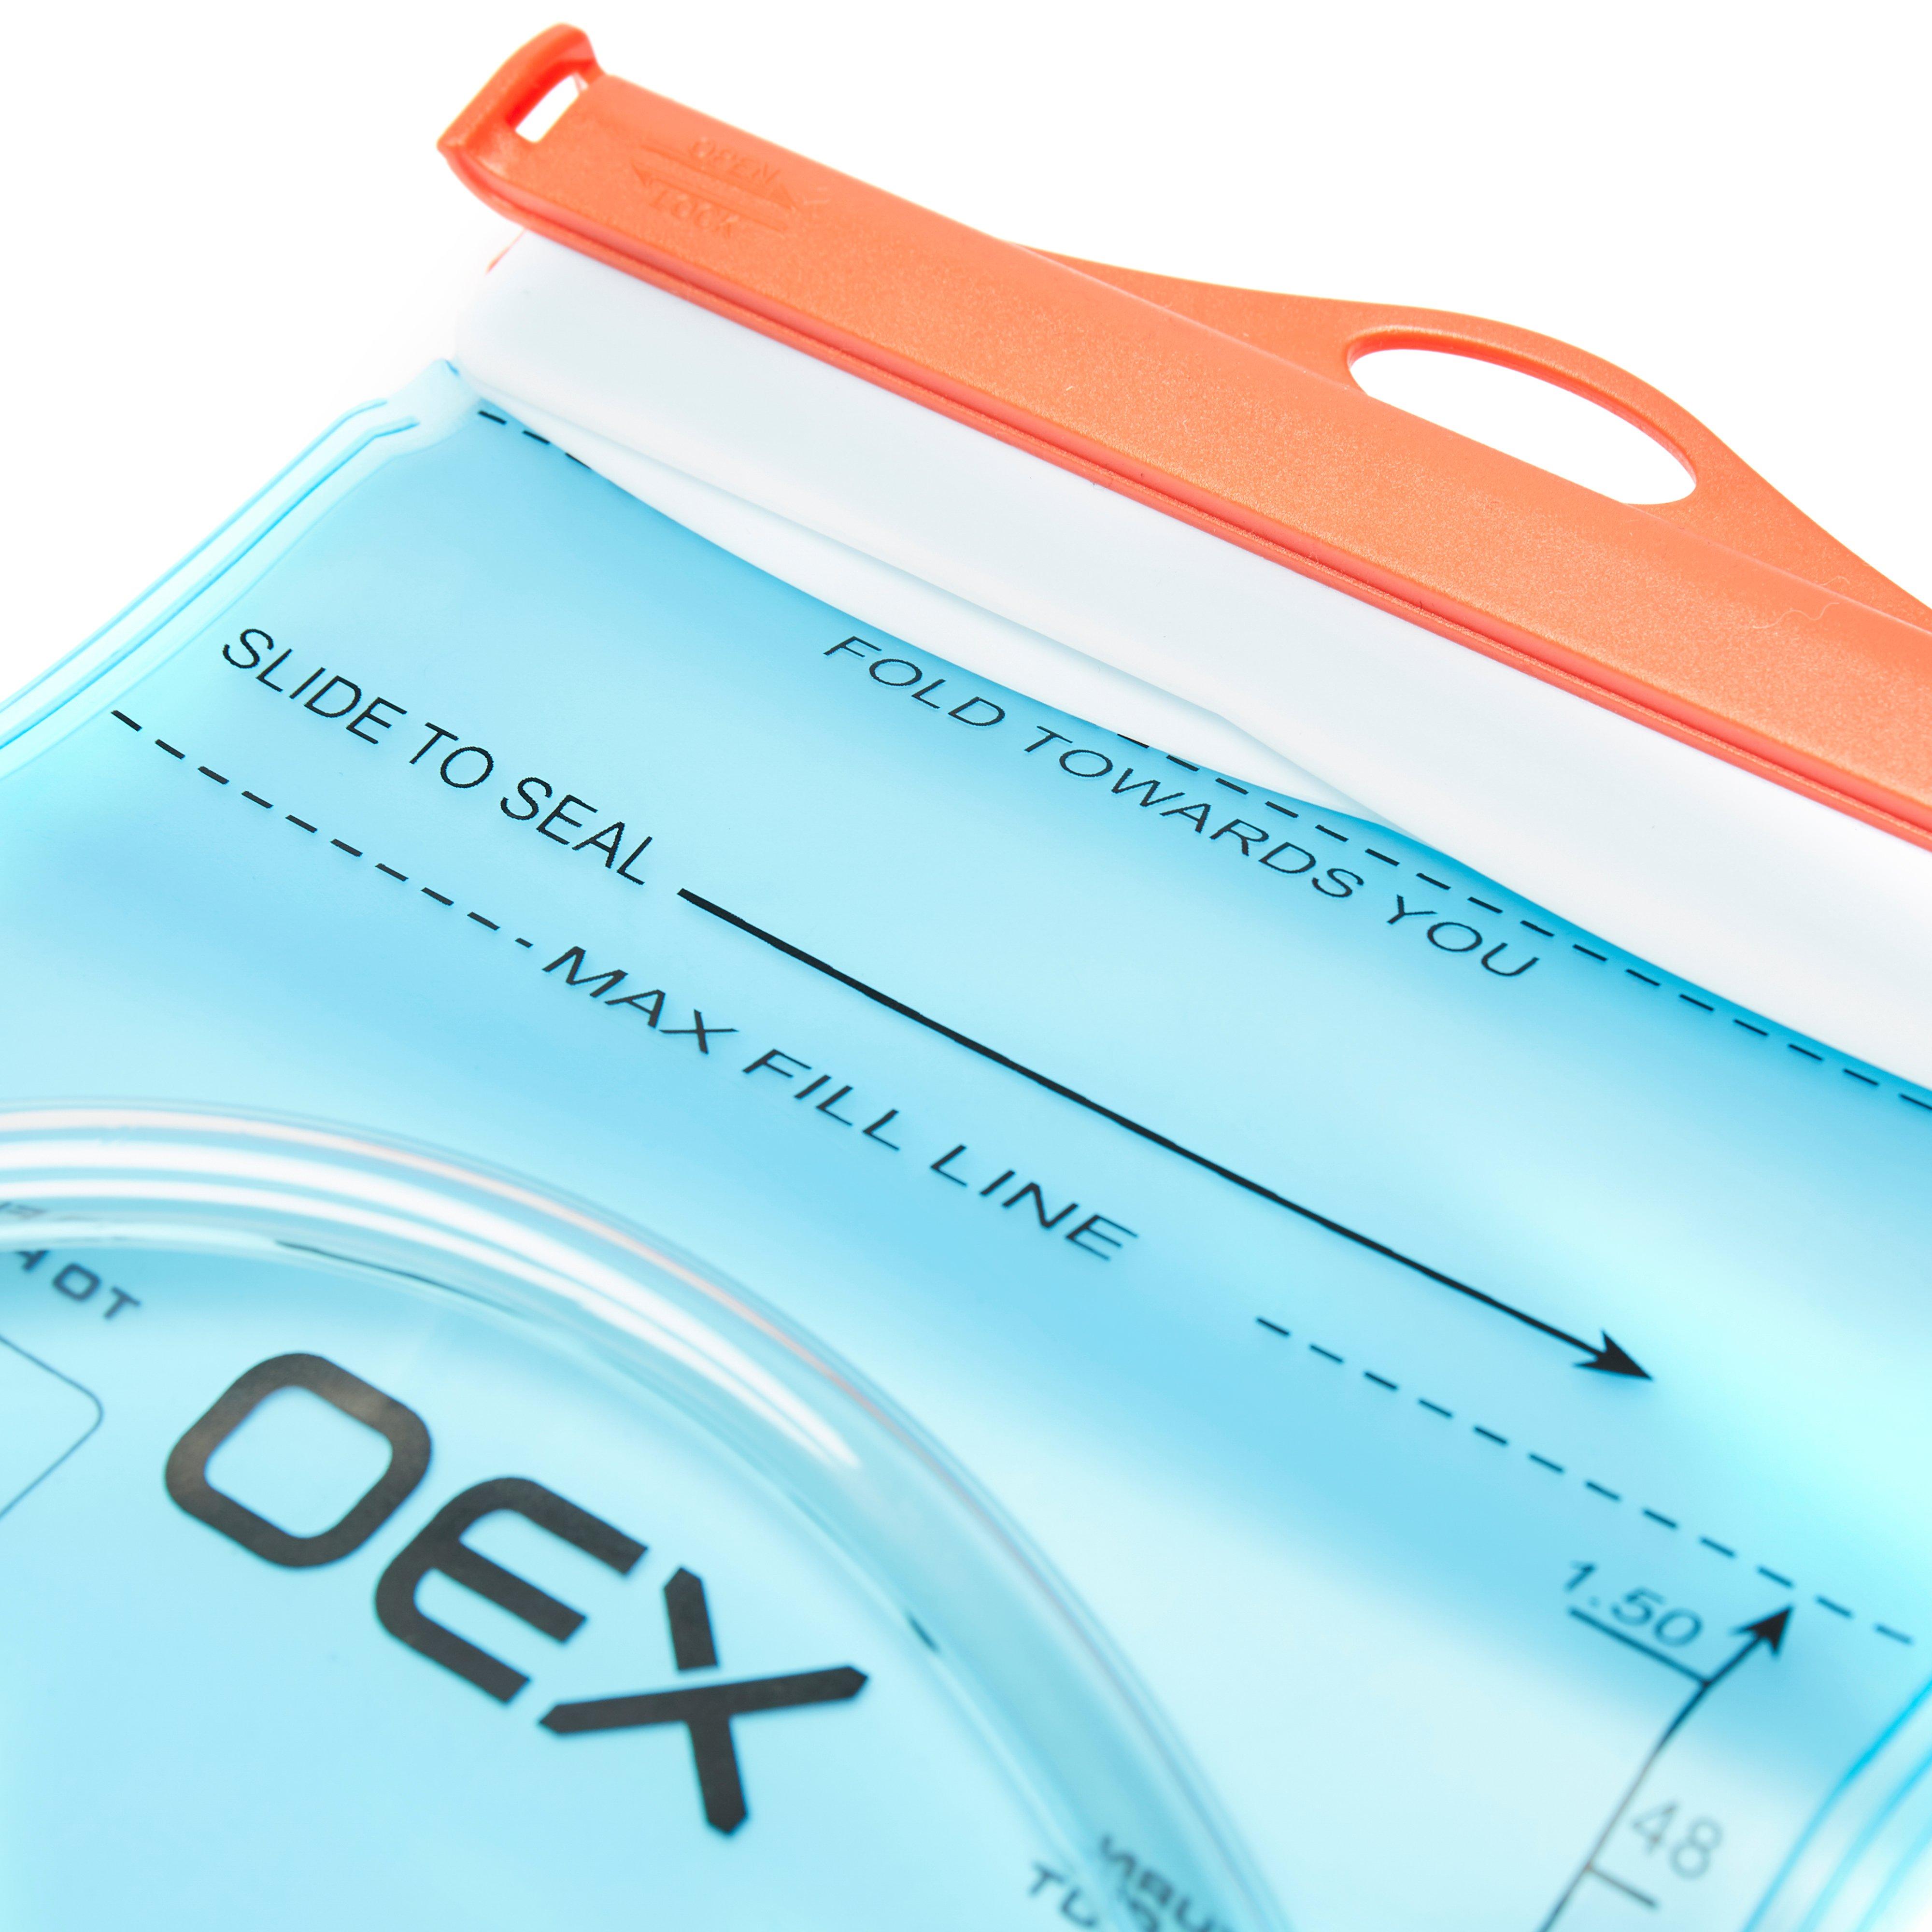 OEX Hydration Bladder (1.5L) Review